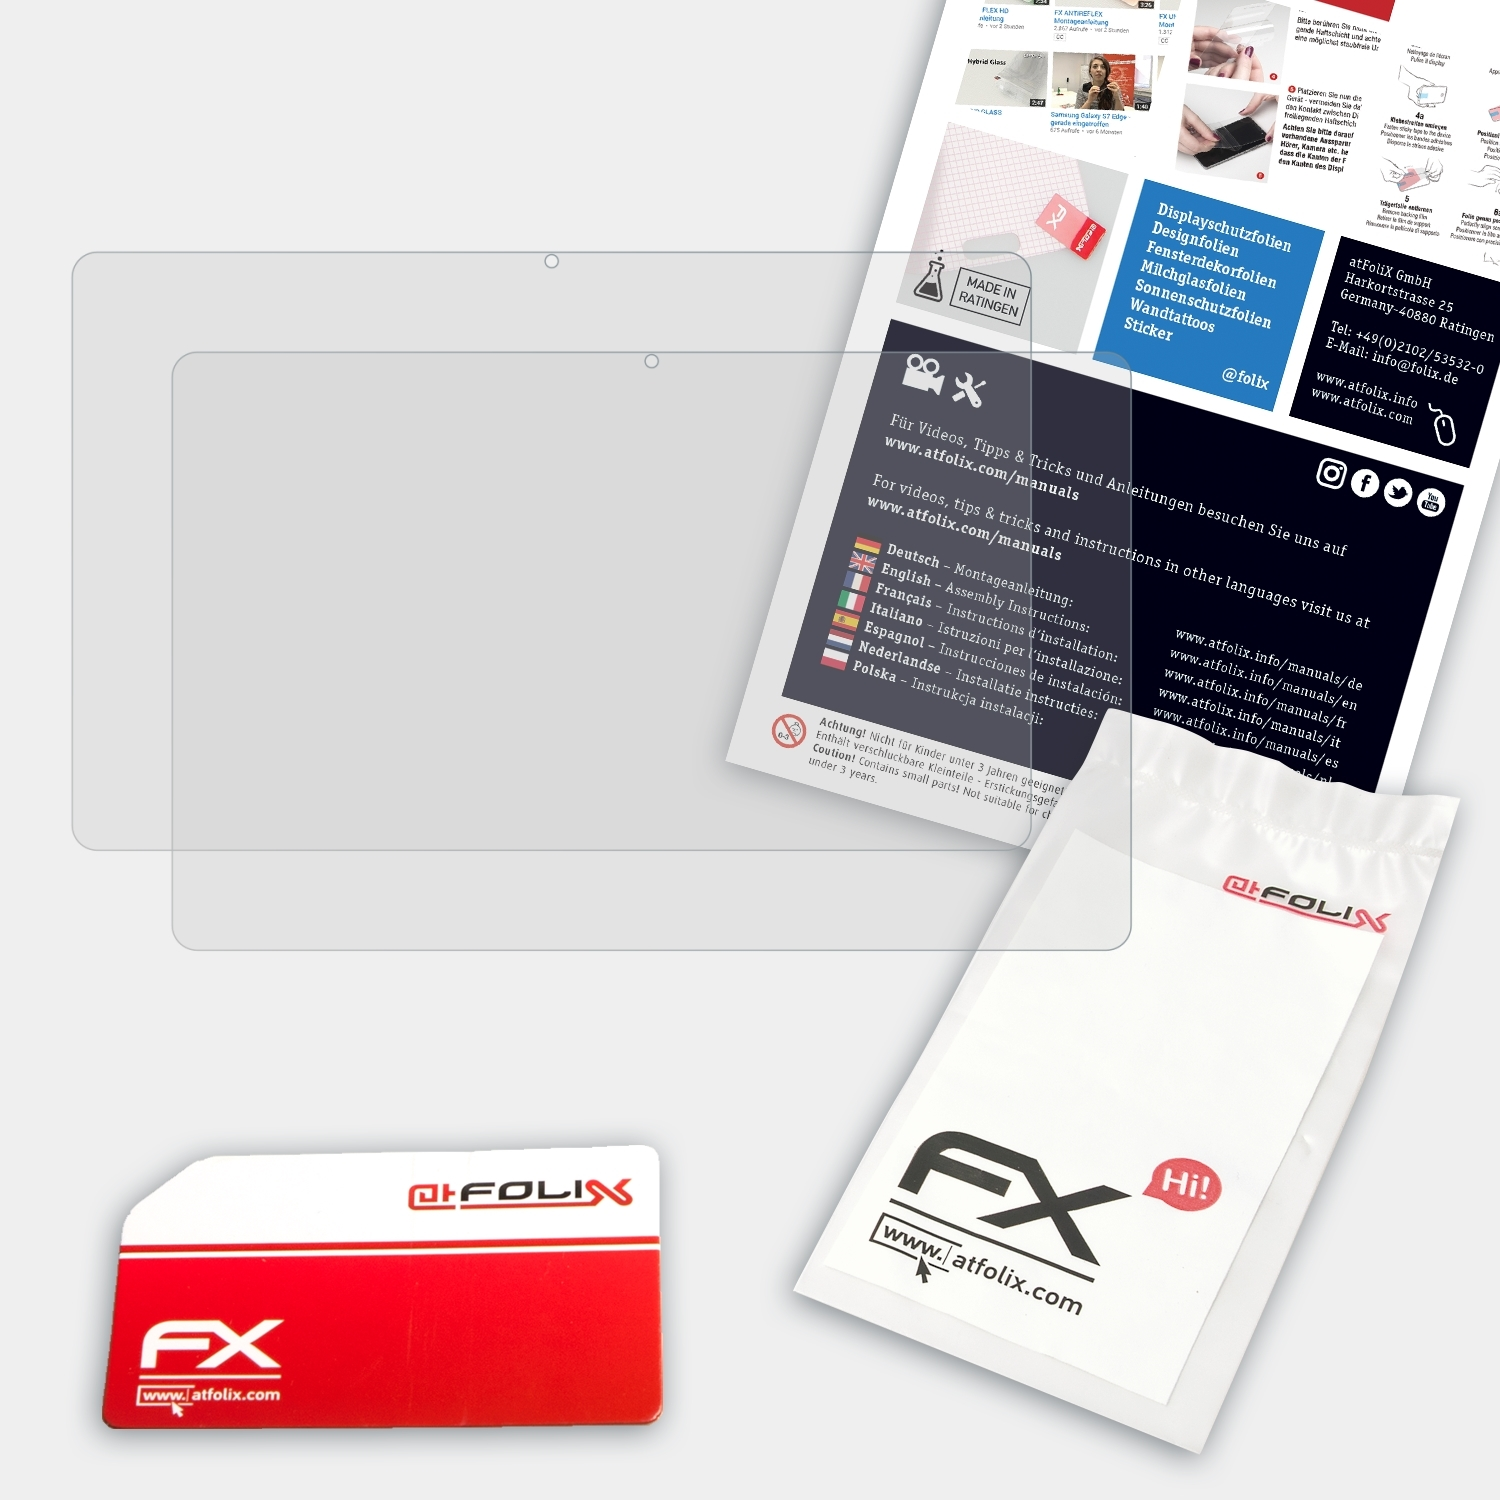 2x FX-Antireflex 11) Plus Lenovo Pad ATFOLIX Displayschutz(für